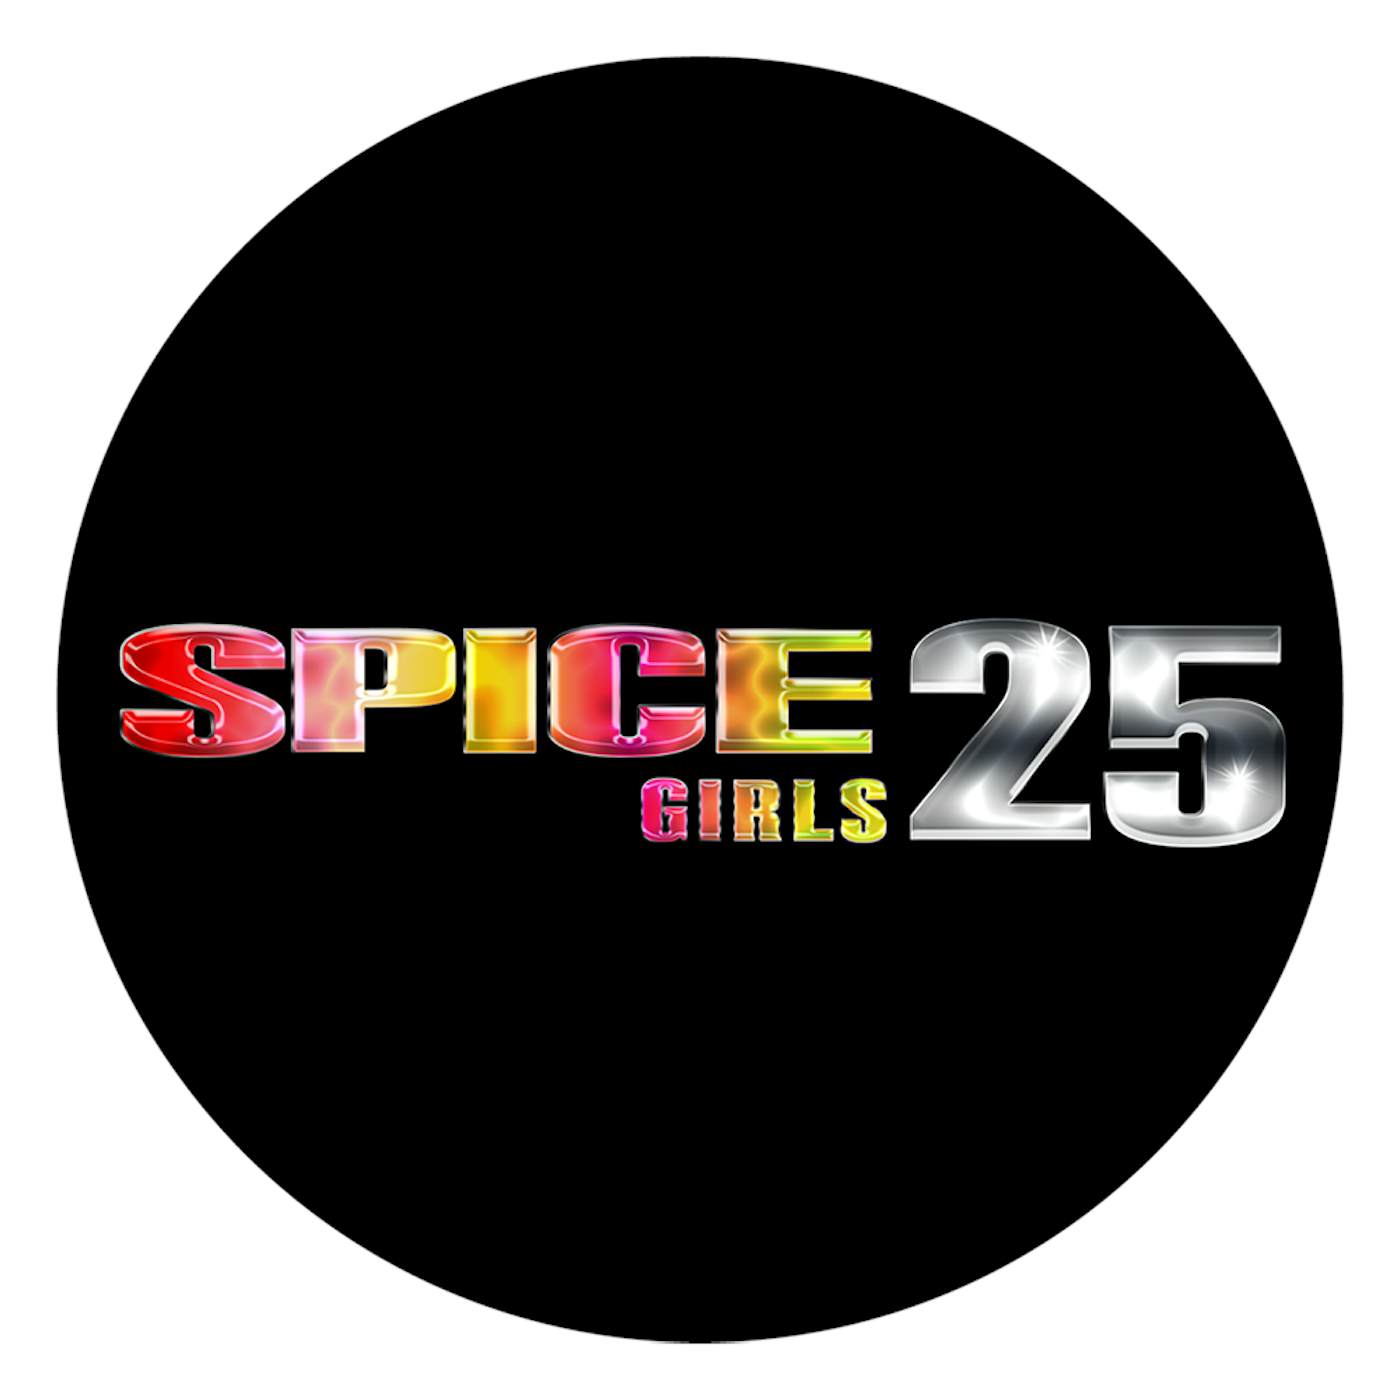 Spice Girls Spice 25 Baby Slipmat